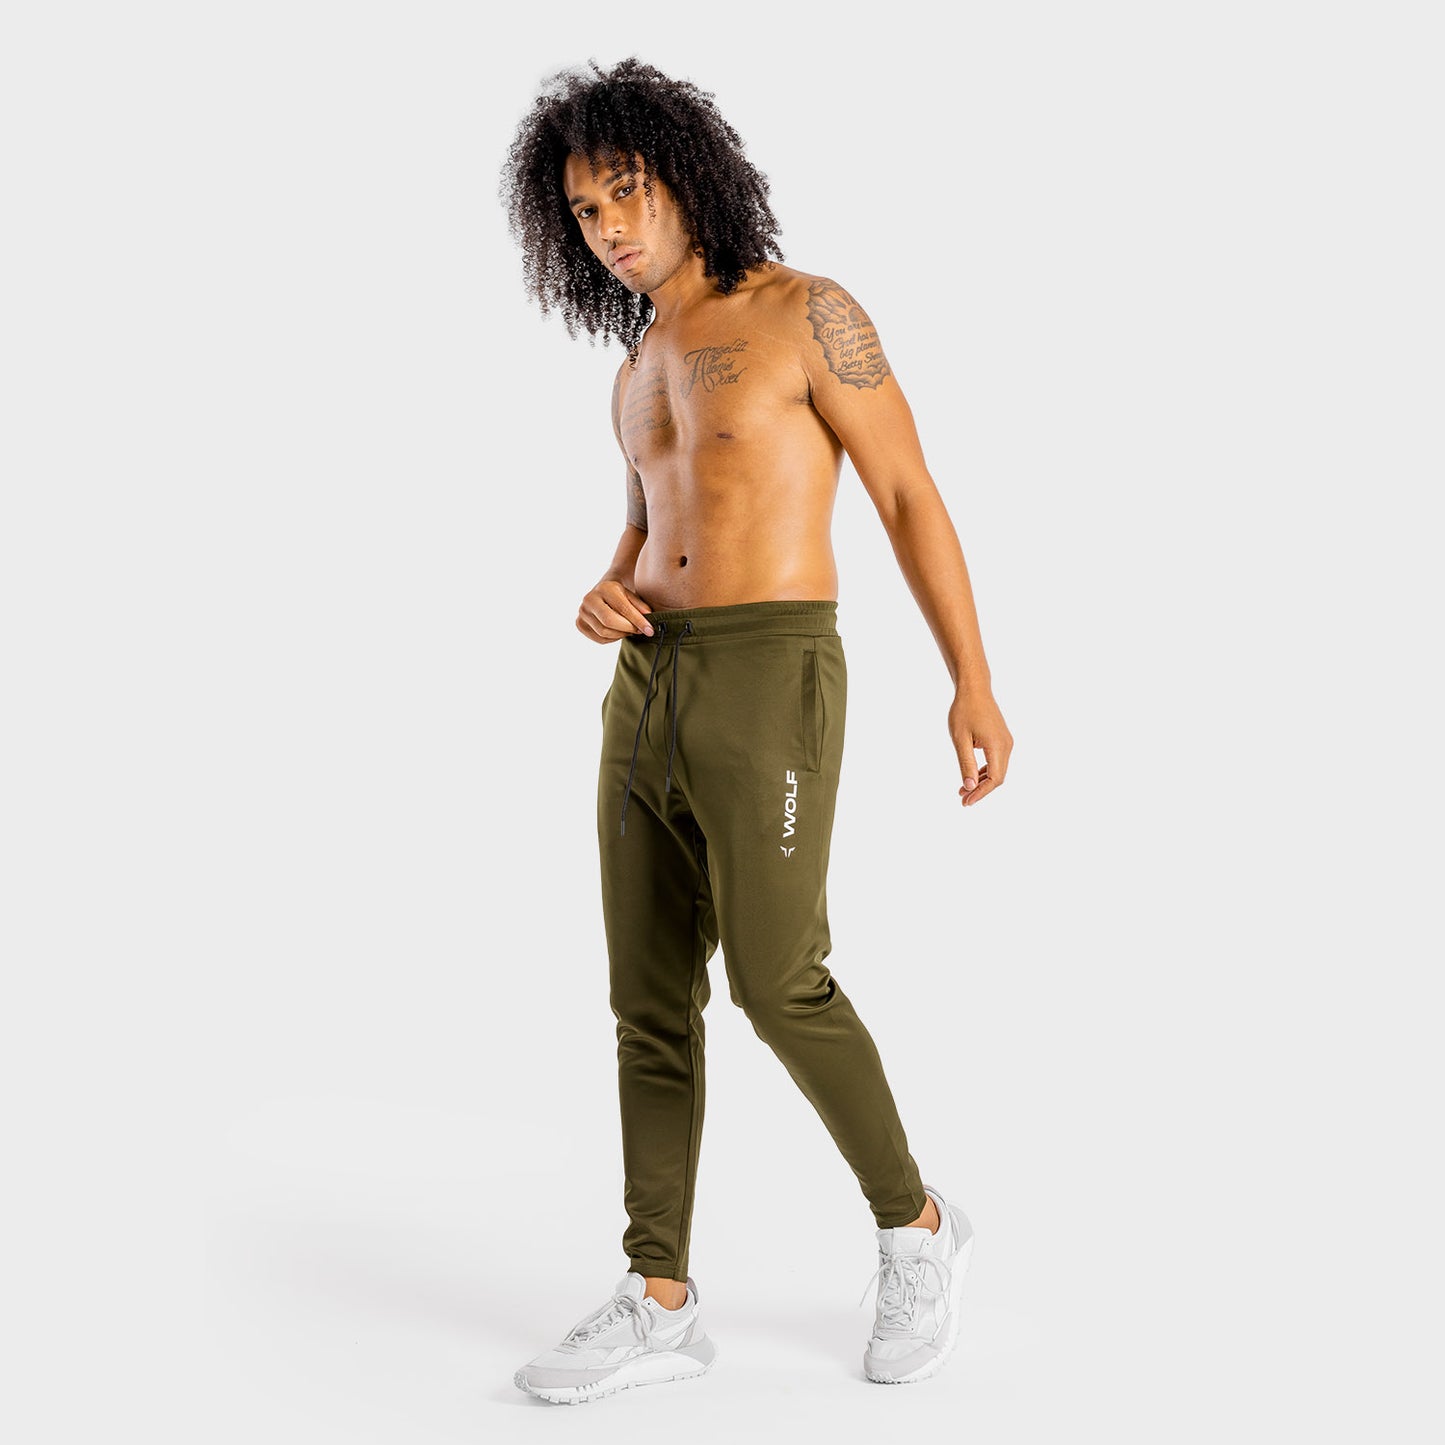 squatwolf-gym-wear-primal-joggers-men-khaki-workout-pants-for-men